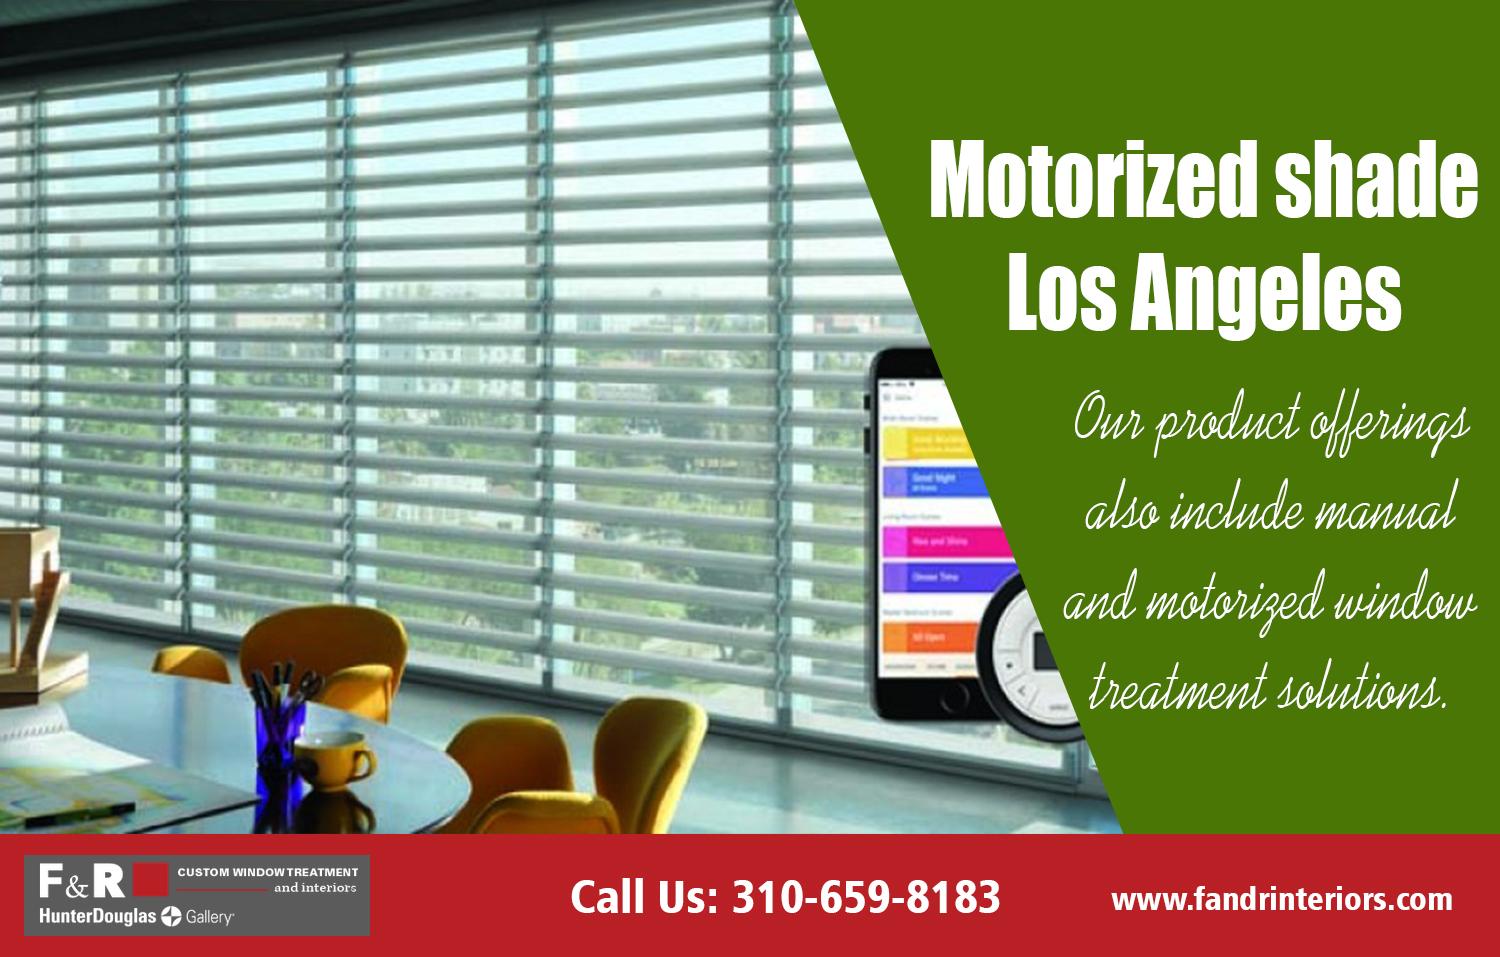 Motorized shade Los Angeles| http://fandrinteriors.com/